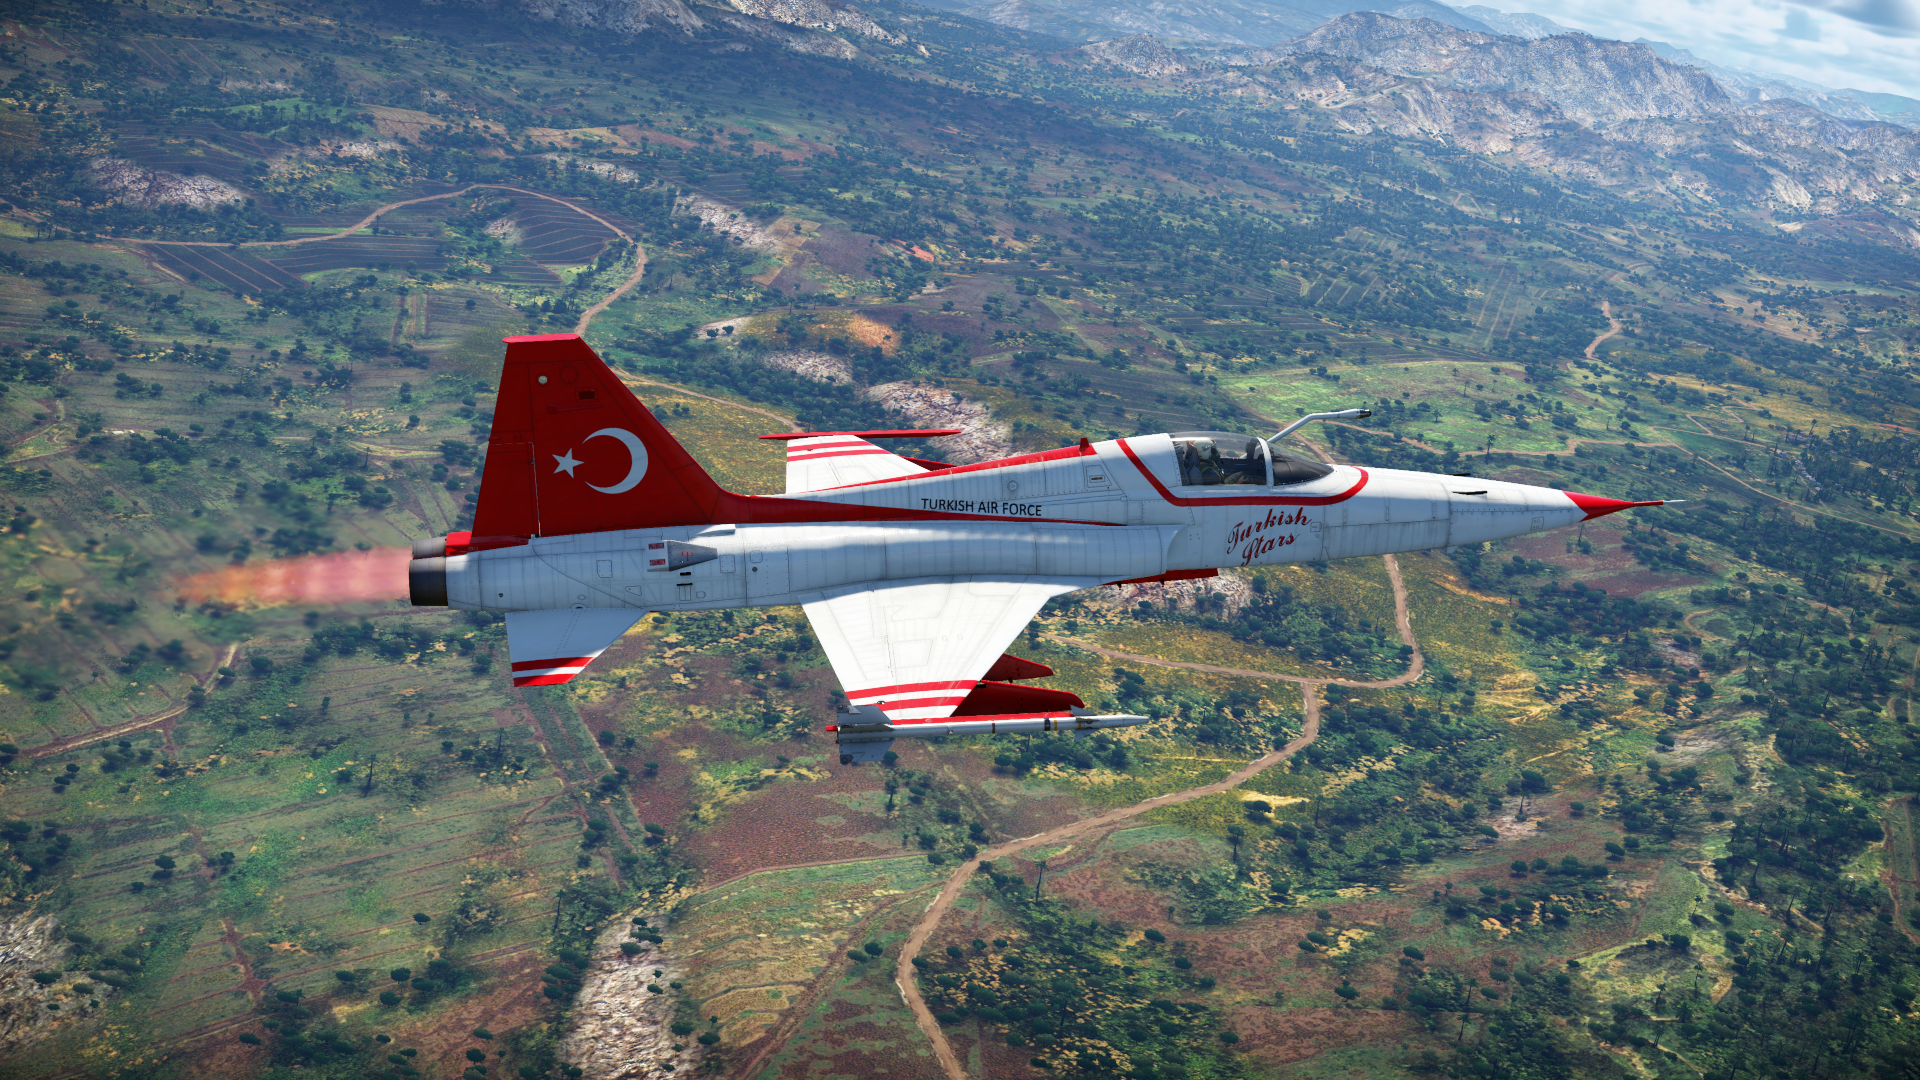 General 1920x1080 War Thunder Turkey Turkish TUAF military CGI video games sky landscape aircraft Northrop F-5 Tiger II